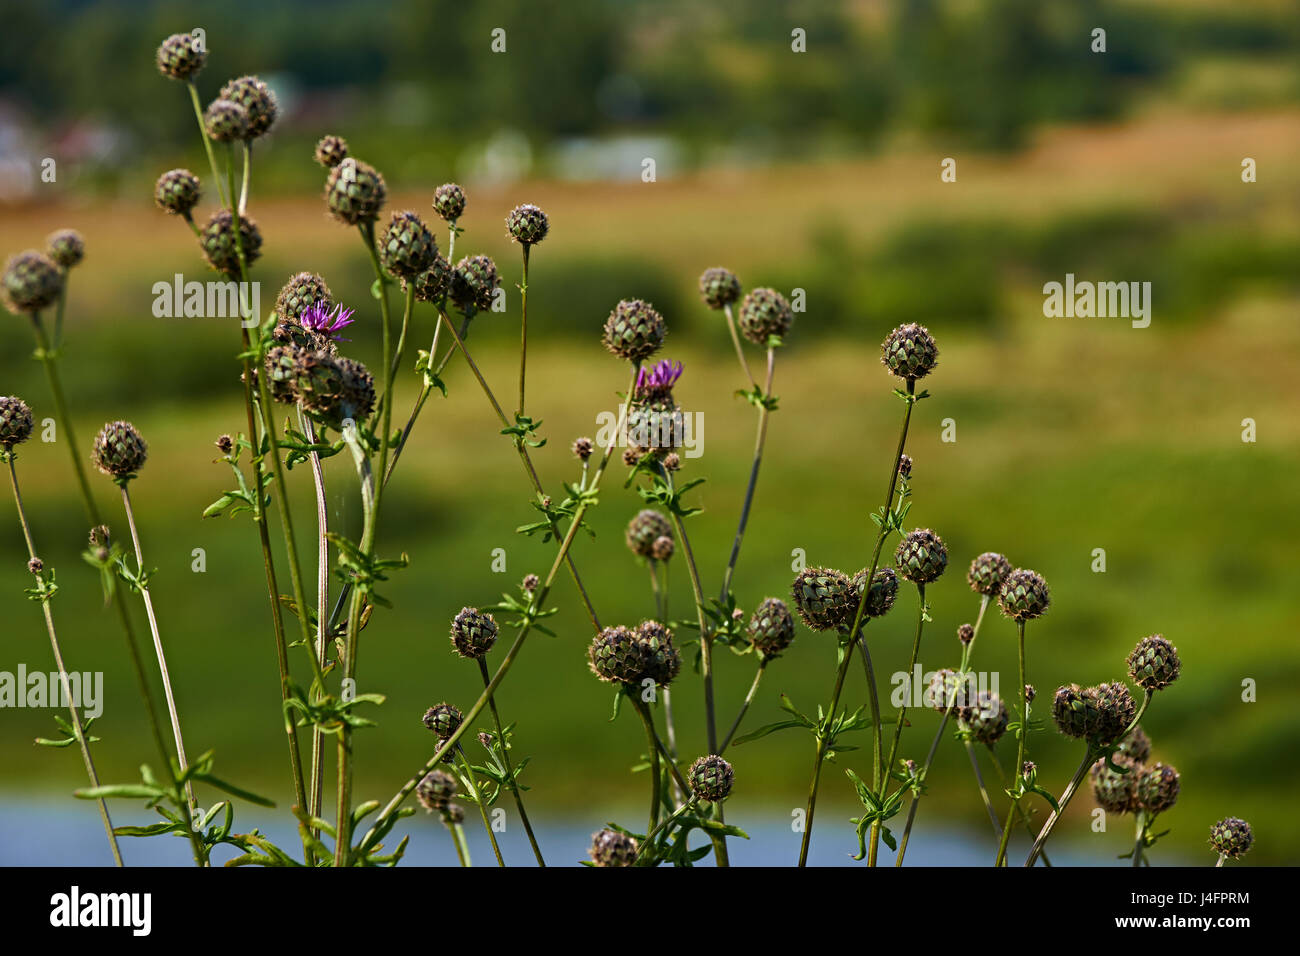 Репейник. Agrimony. Agrimony on a blurred background. Russia, Pskov region, landscape, nature, July, 2015 Stock Photo